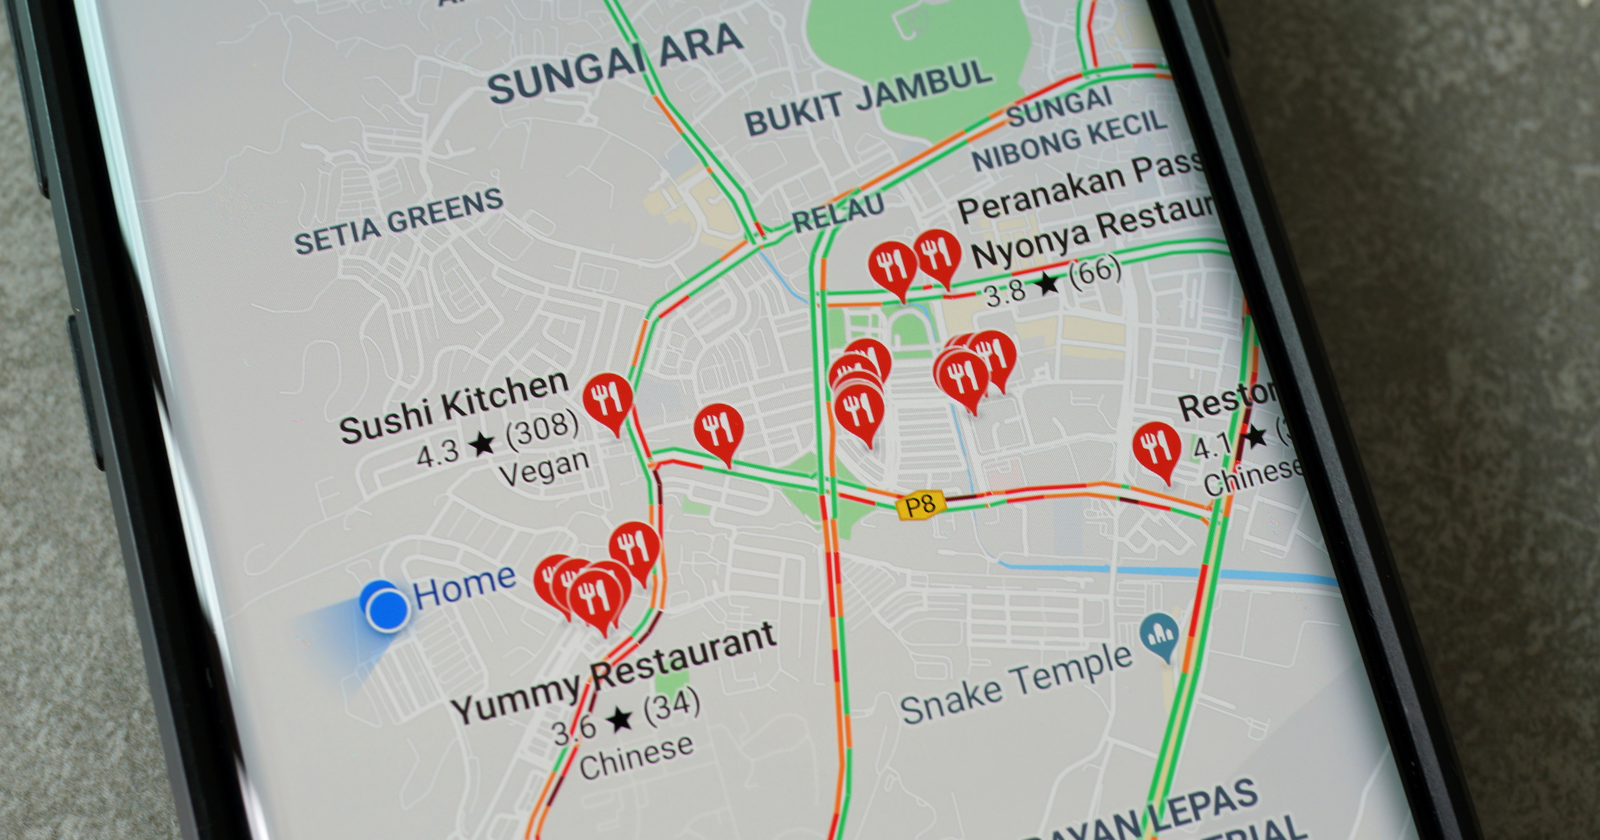 Restaurants shown on Google Maps